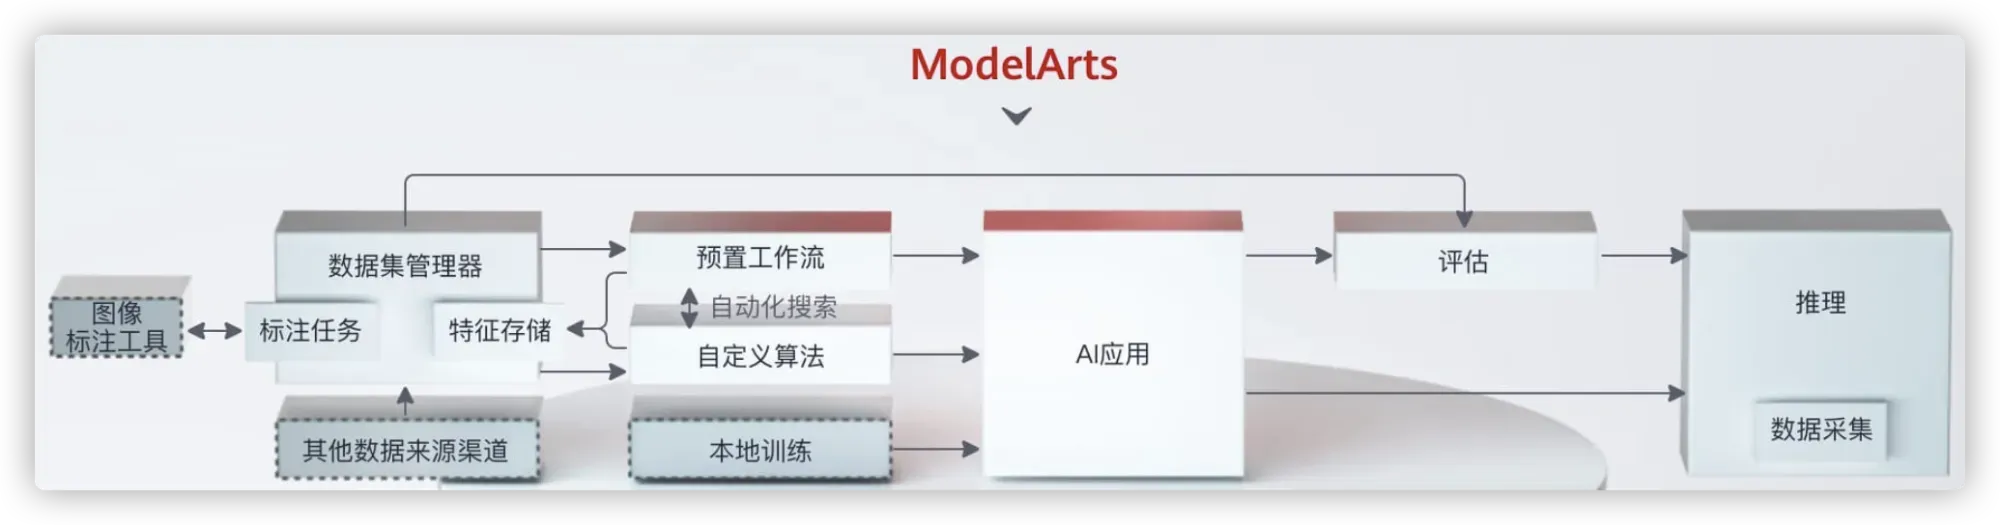 ModelArts + Gallery = 0基础玩转AI